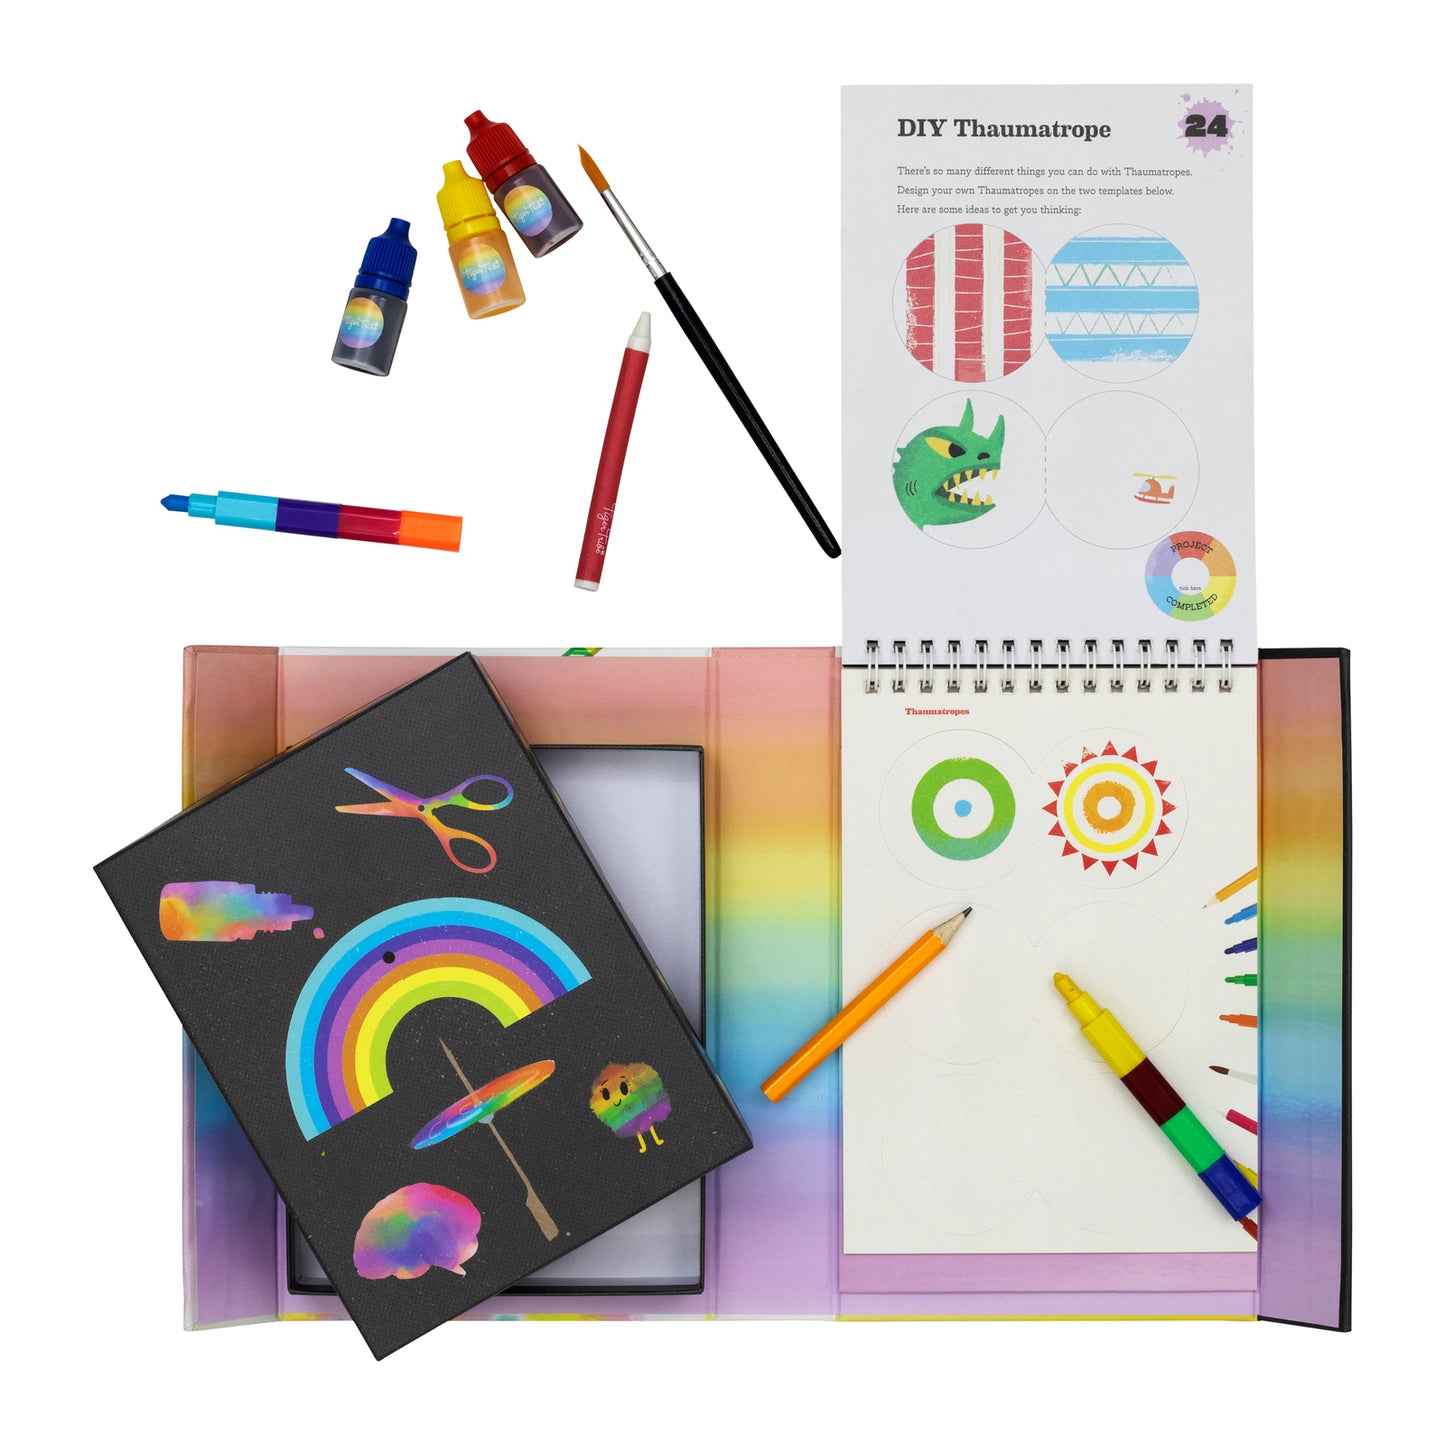 Rainbow Lab - Colour Activity Set